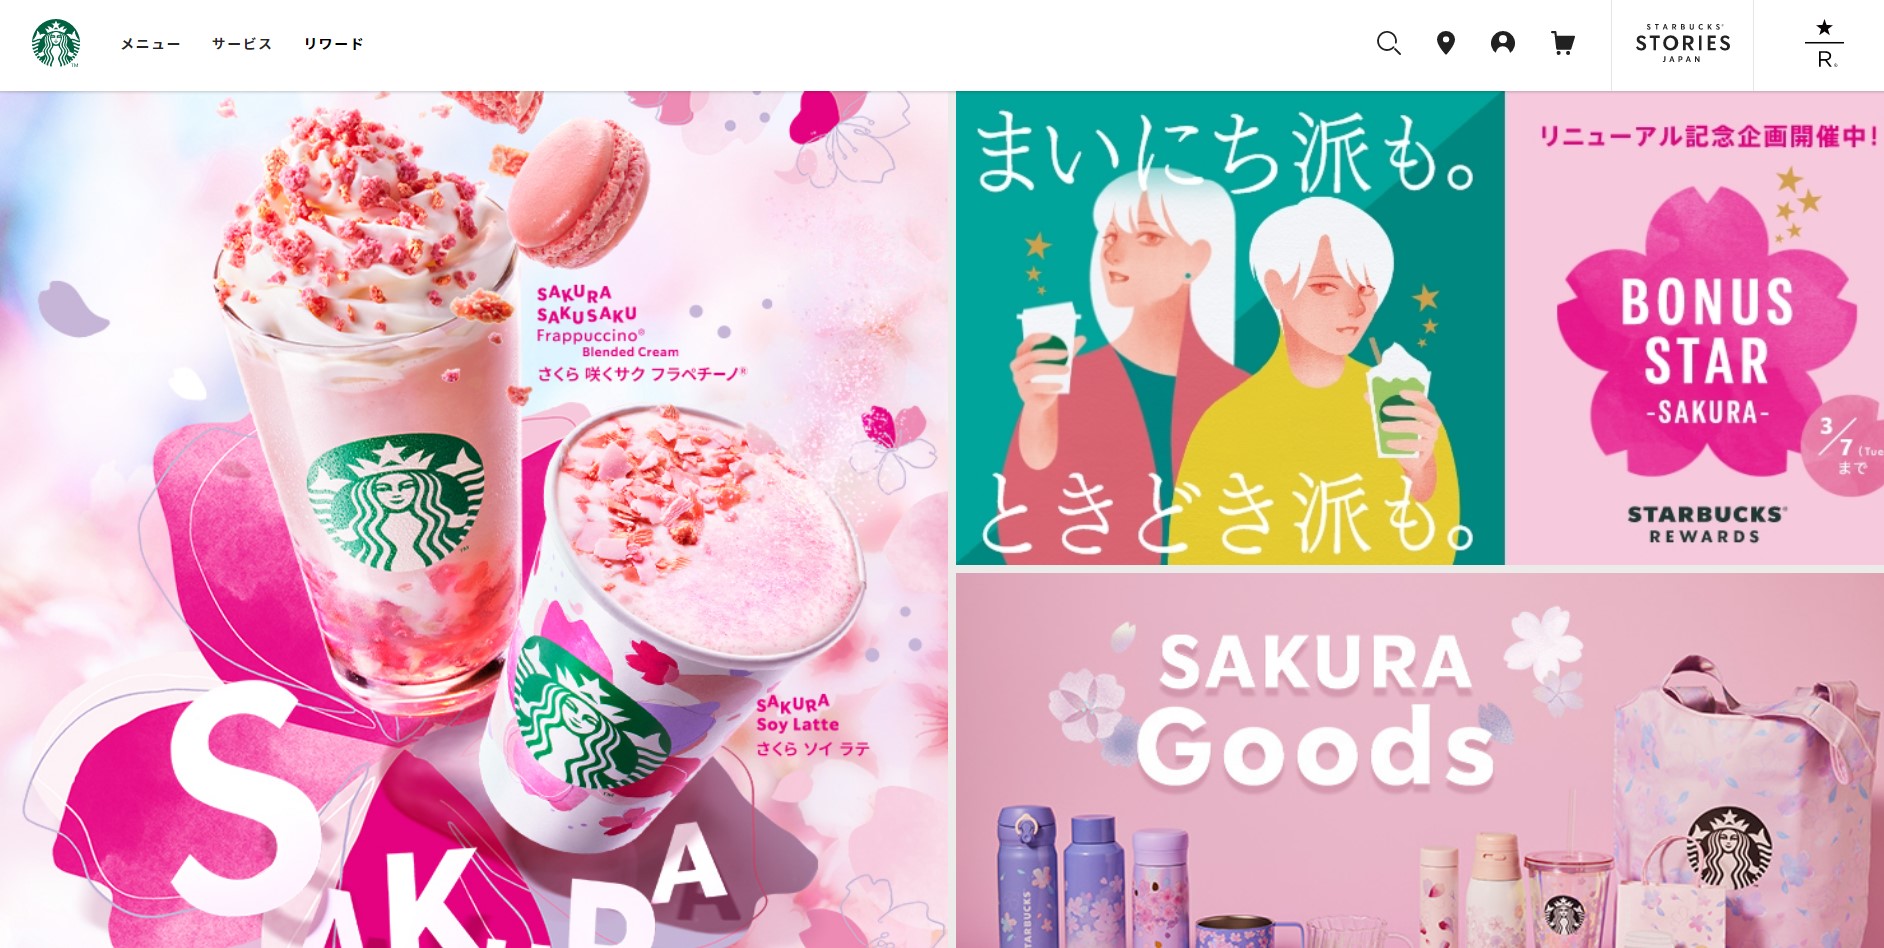 Starbucks in Japan has colorful branding